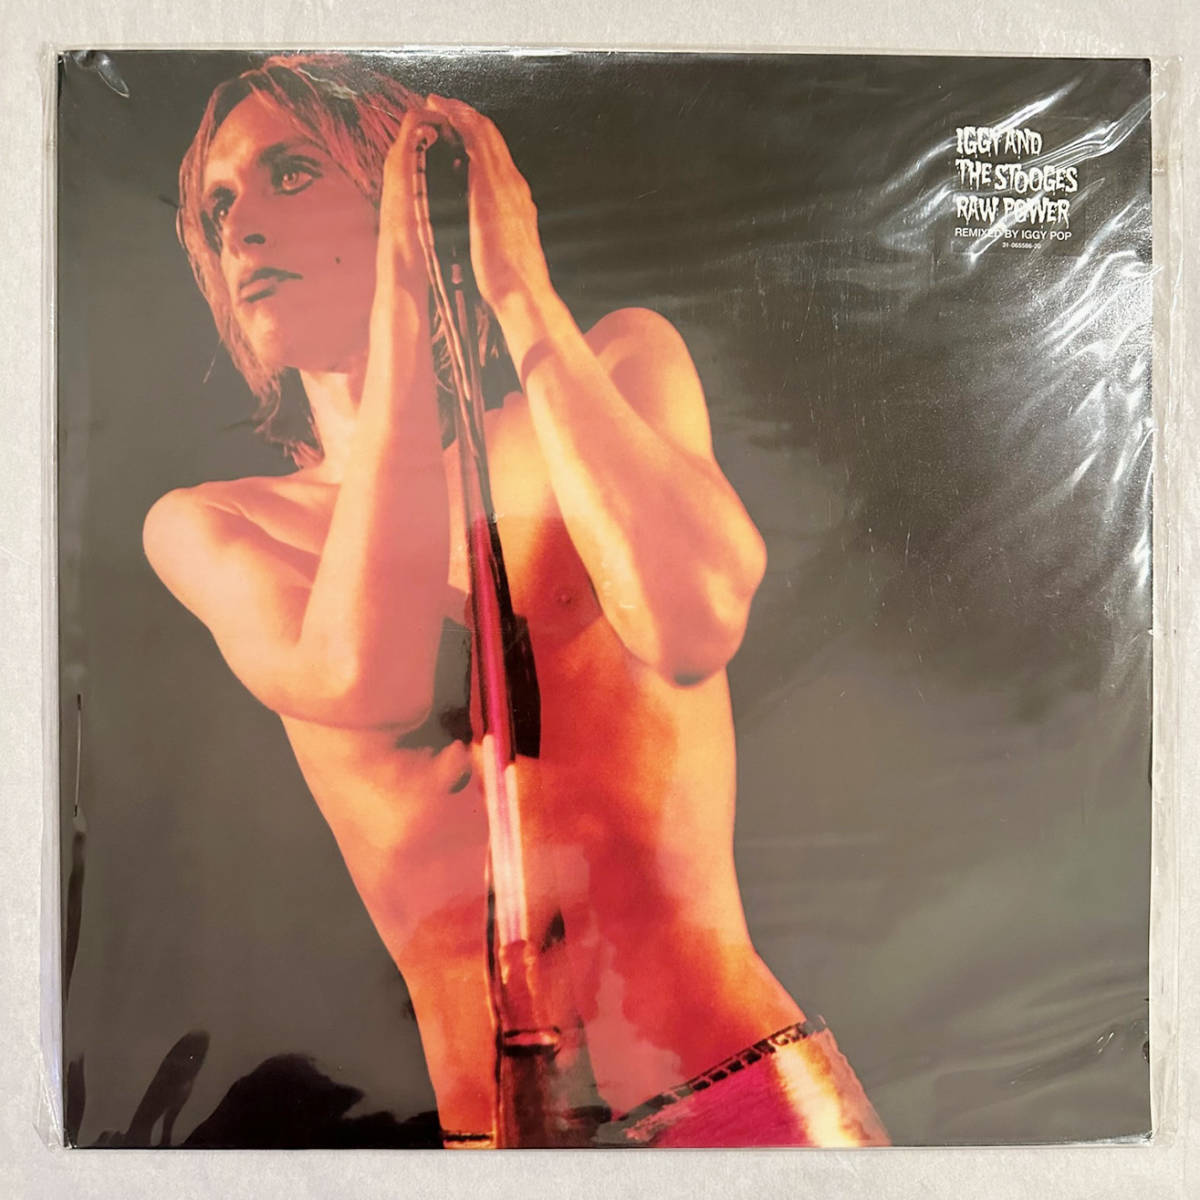 ■1997年 Europe盤 Reissue 新品 Iggy and The Stooges - Raw Power (Remixed by Iggy Pop) 12”LP 65586 Columbia Iggy Pop_画像1